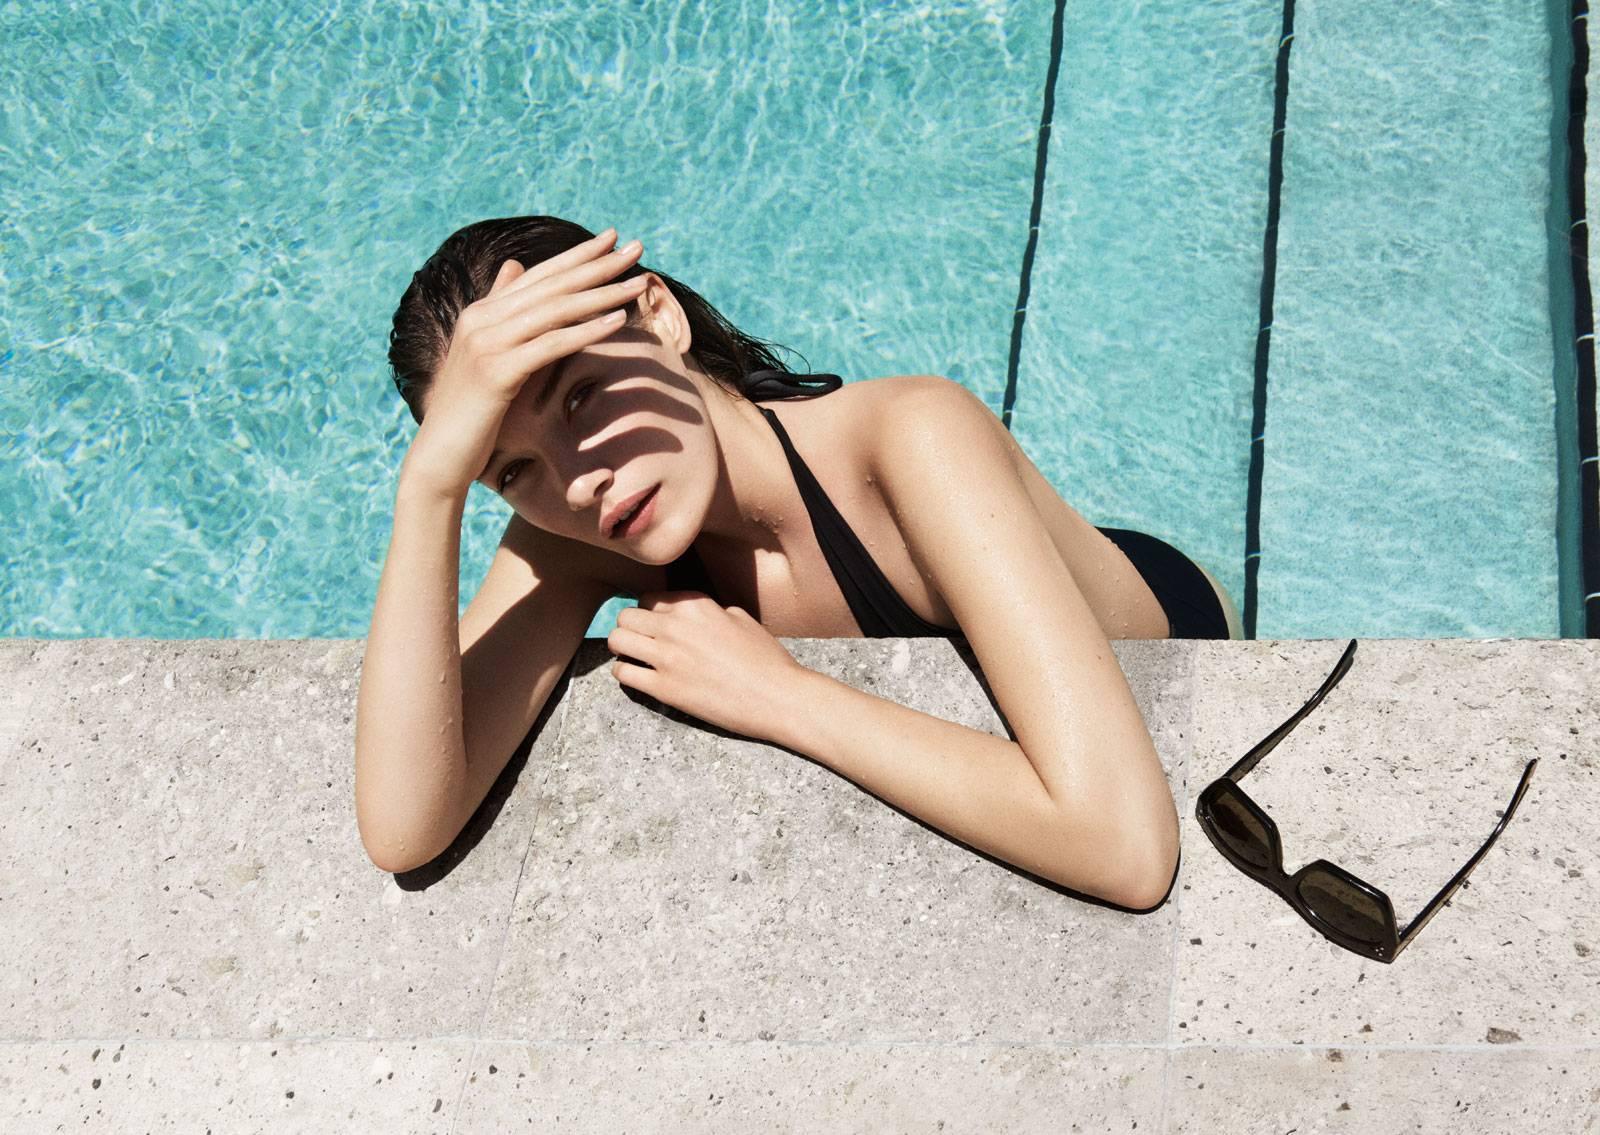 Jessica, Pool, Miami - Photograph by Pamela Hanson